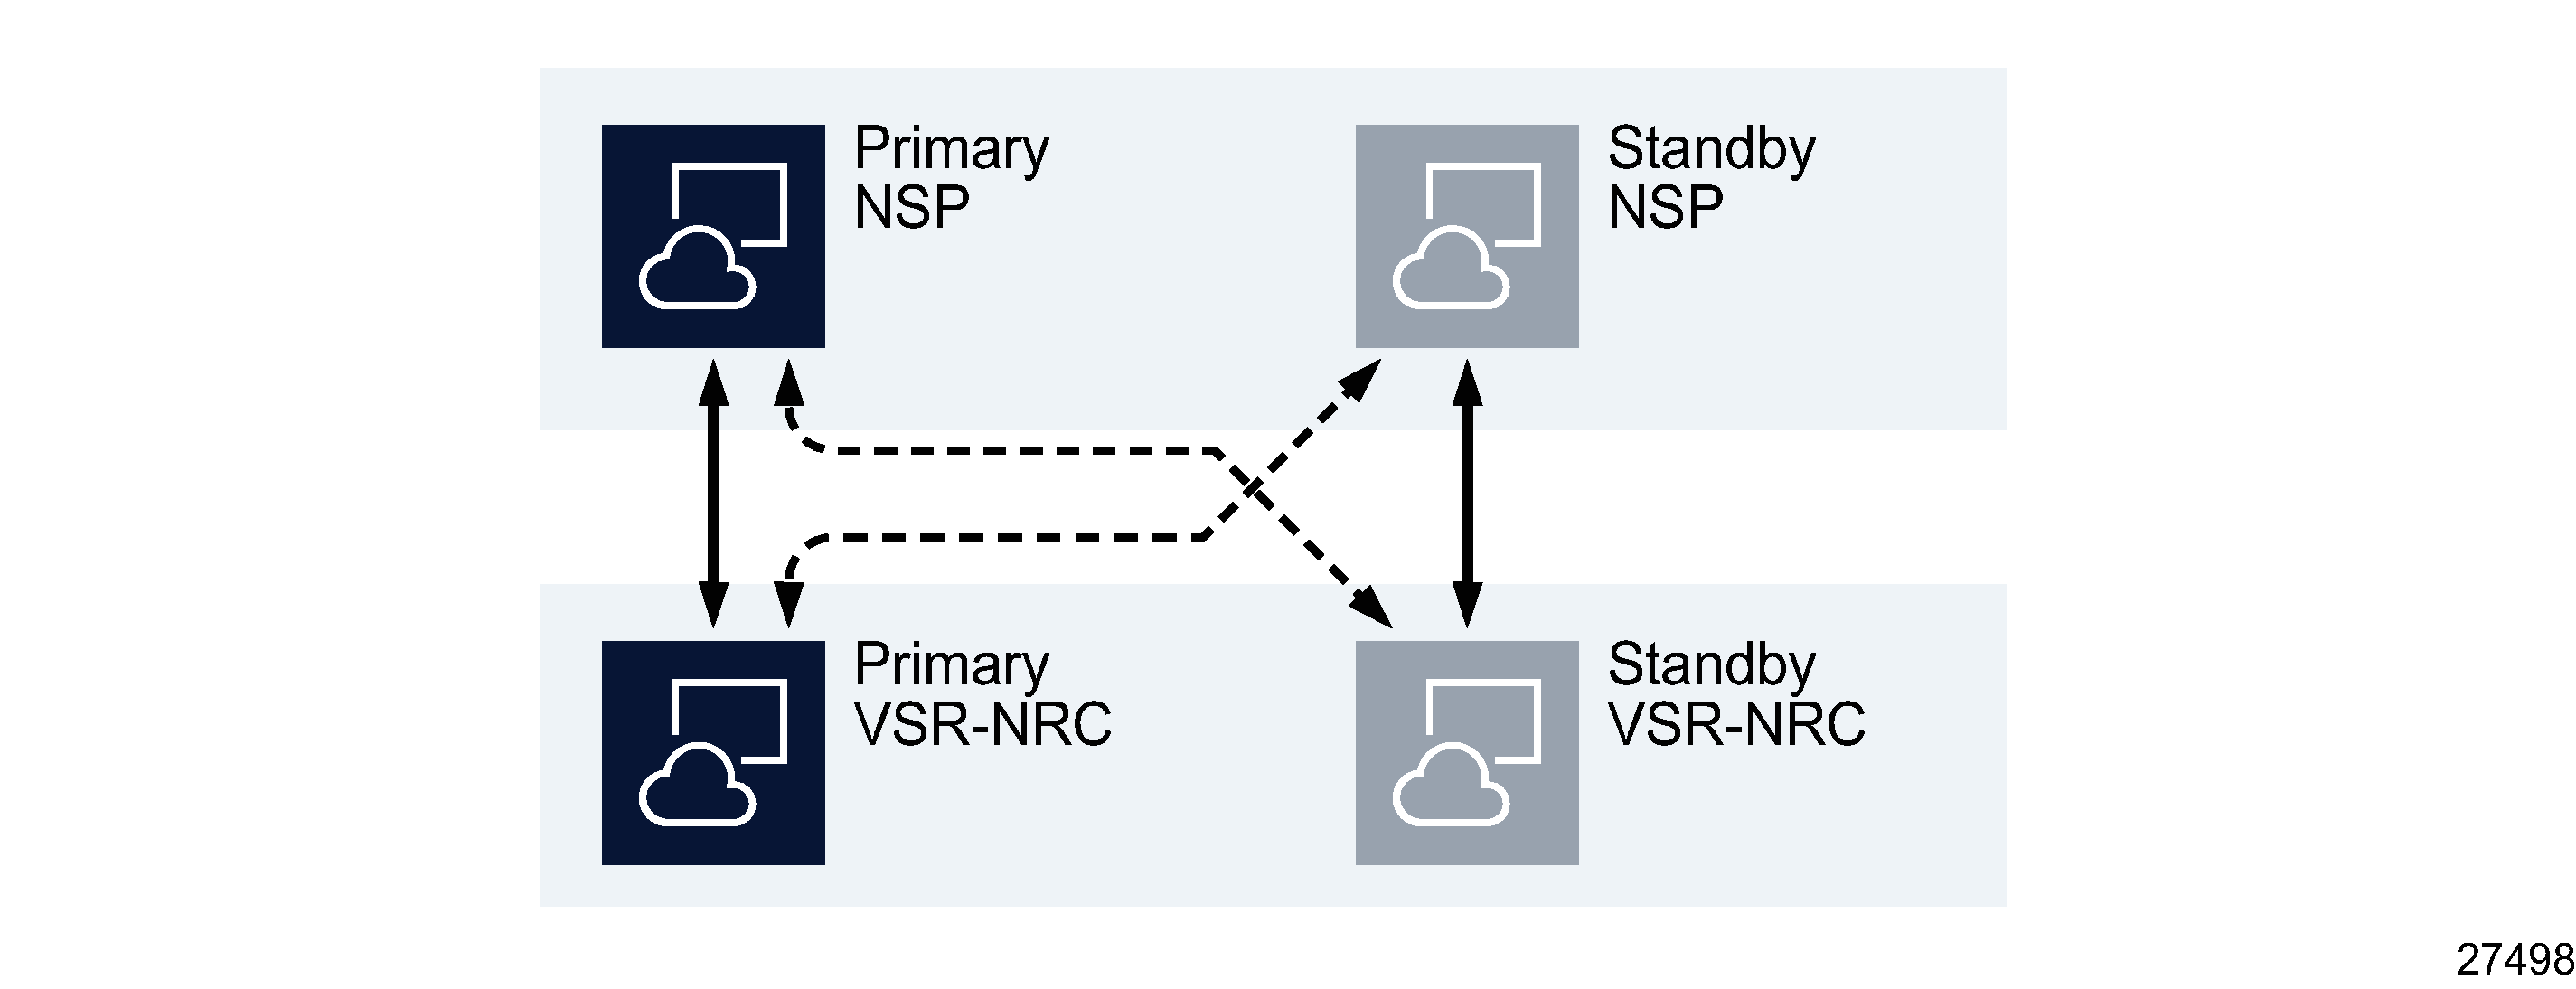 Redundant NSP deployment with redundant VSR-NRC